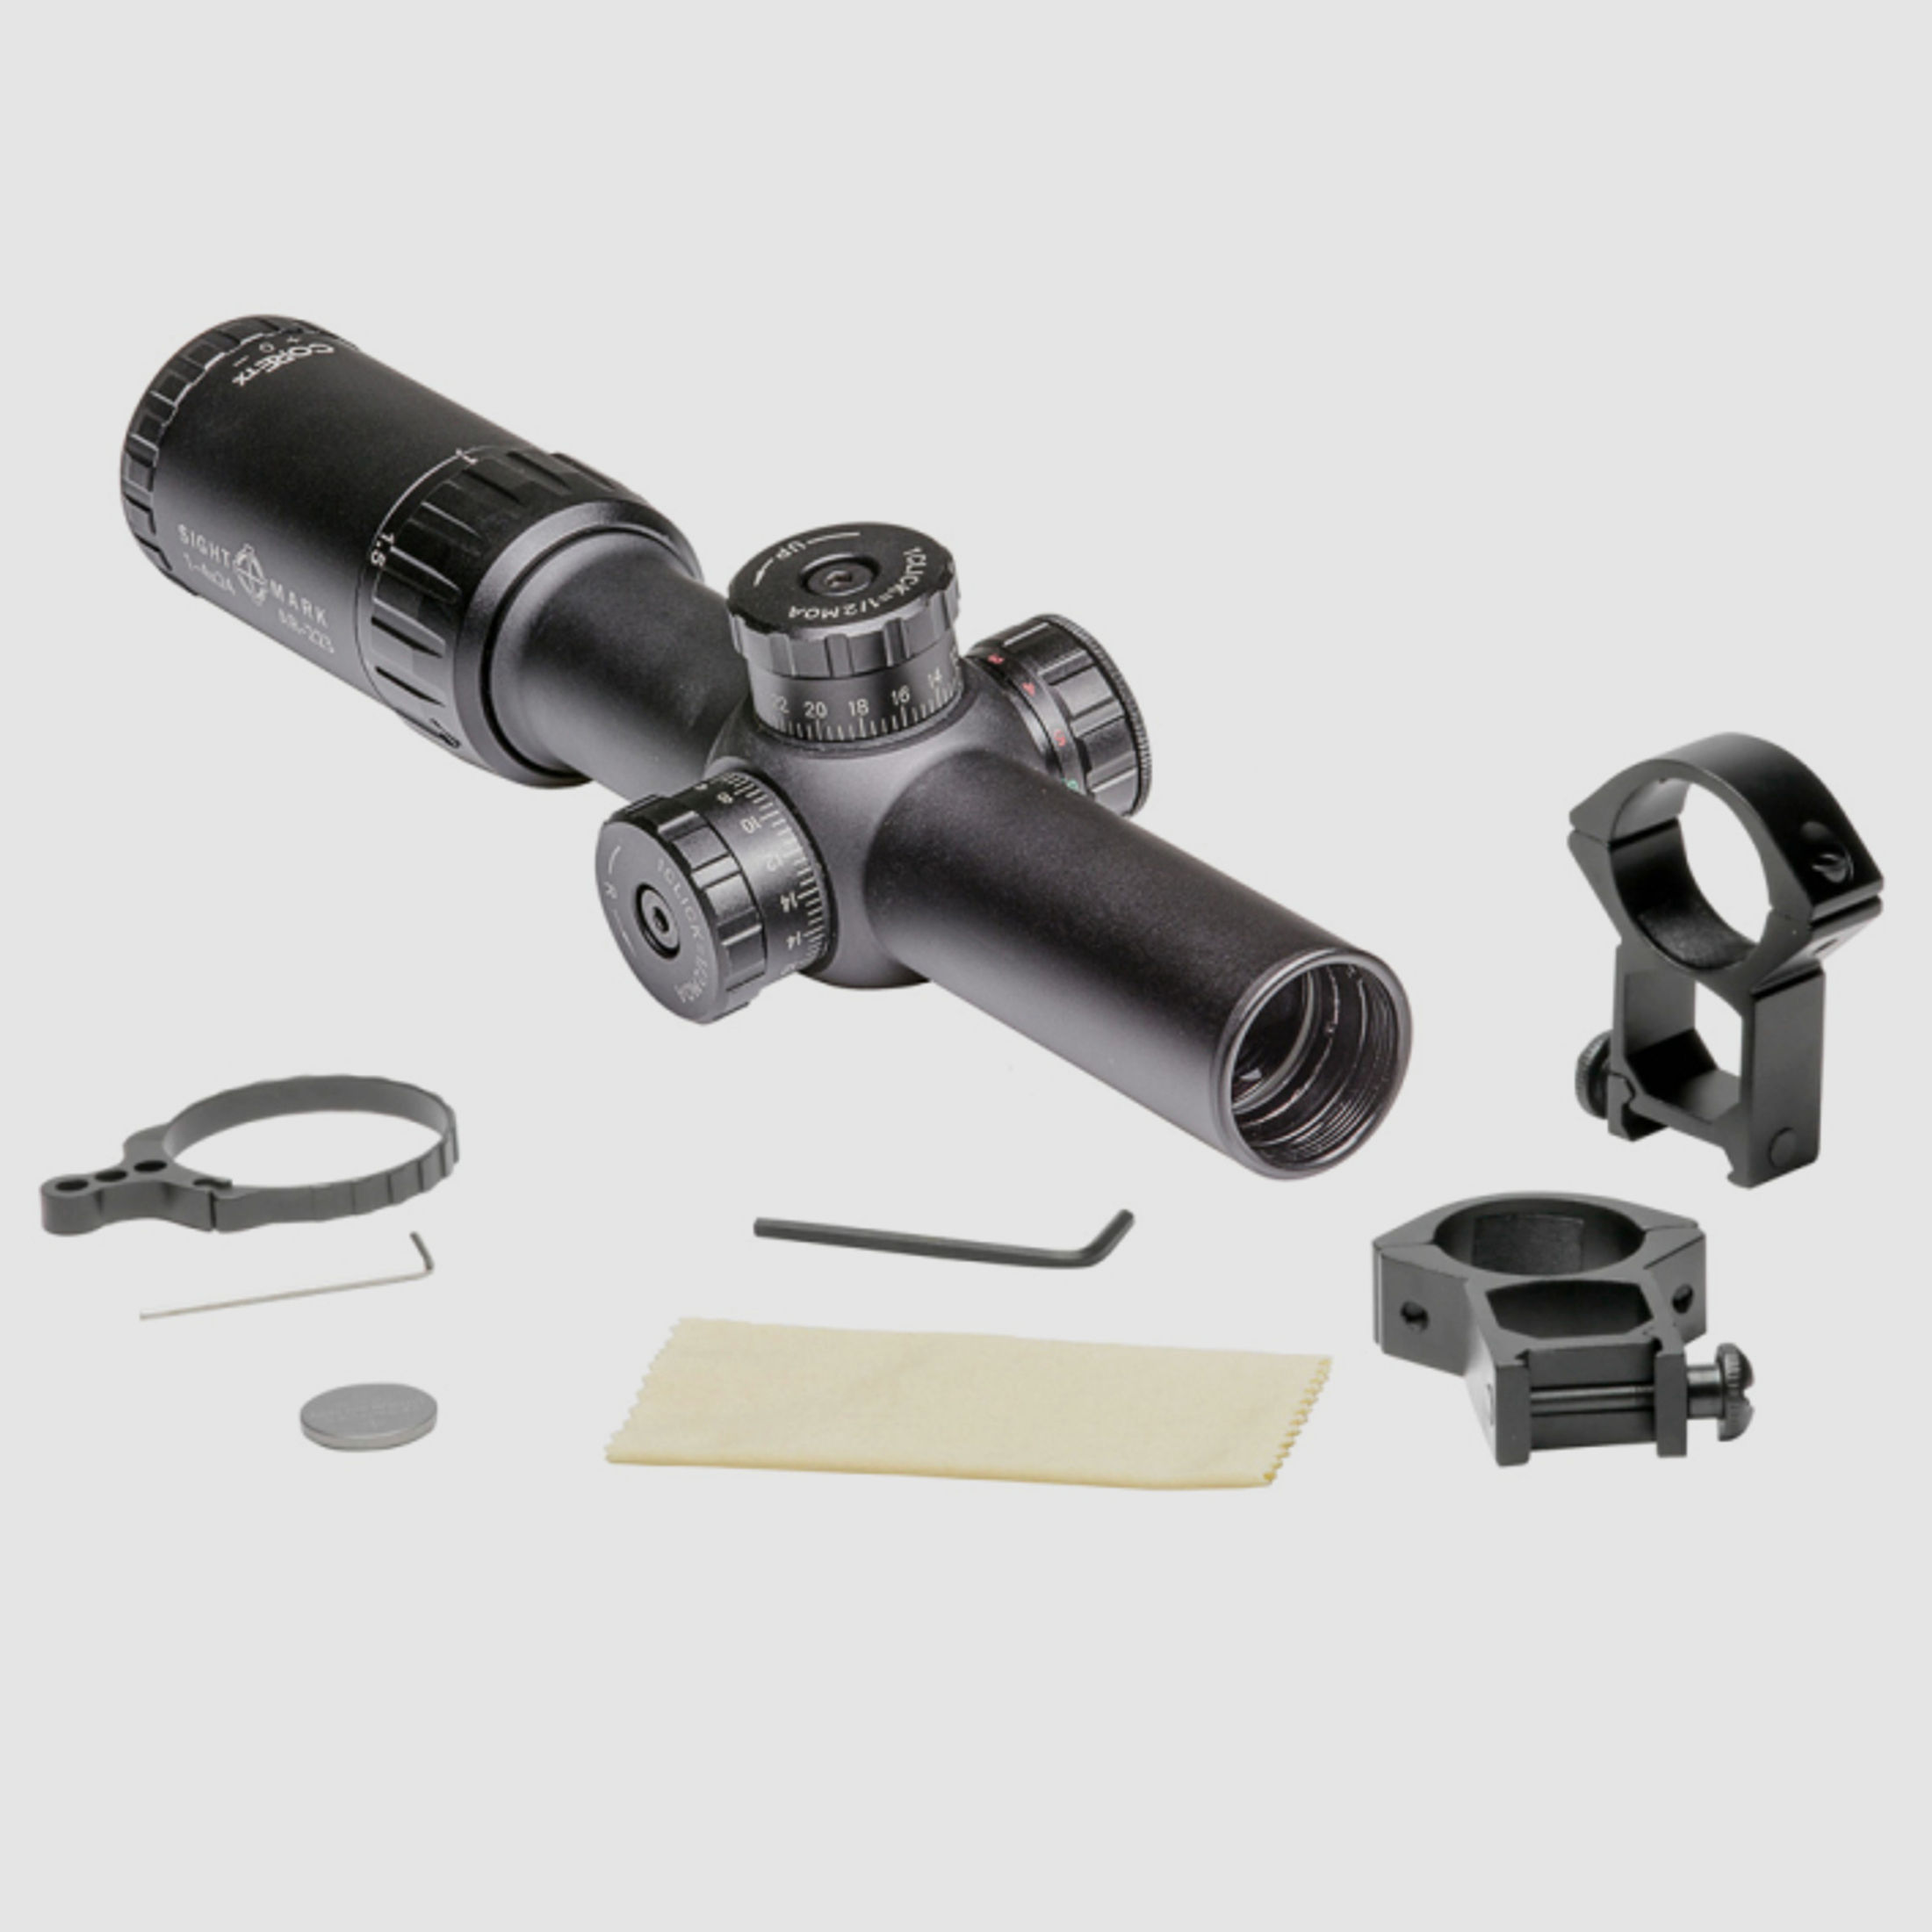 NEU Sightmark Core TX 1-4 x 24AR-223 BDC Riflescope SET Zielfernrohr ZF 30 mm 1  4 Beleuchtet .223